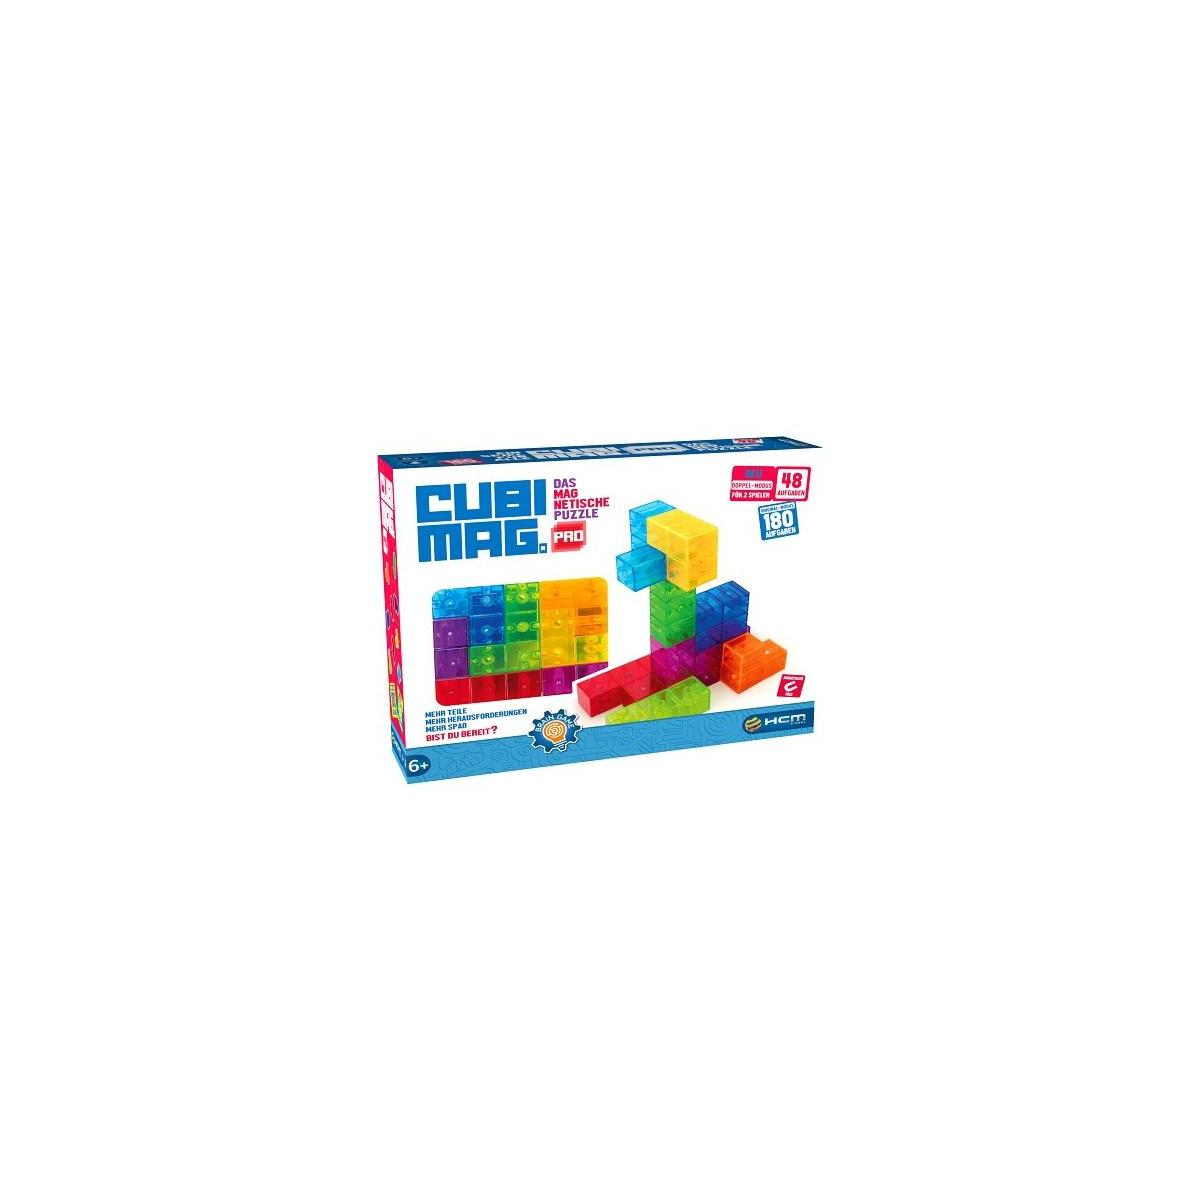 HCM55169 Puzzlespiel HCM GMBH / Rätselspiel KINZEL